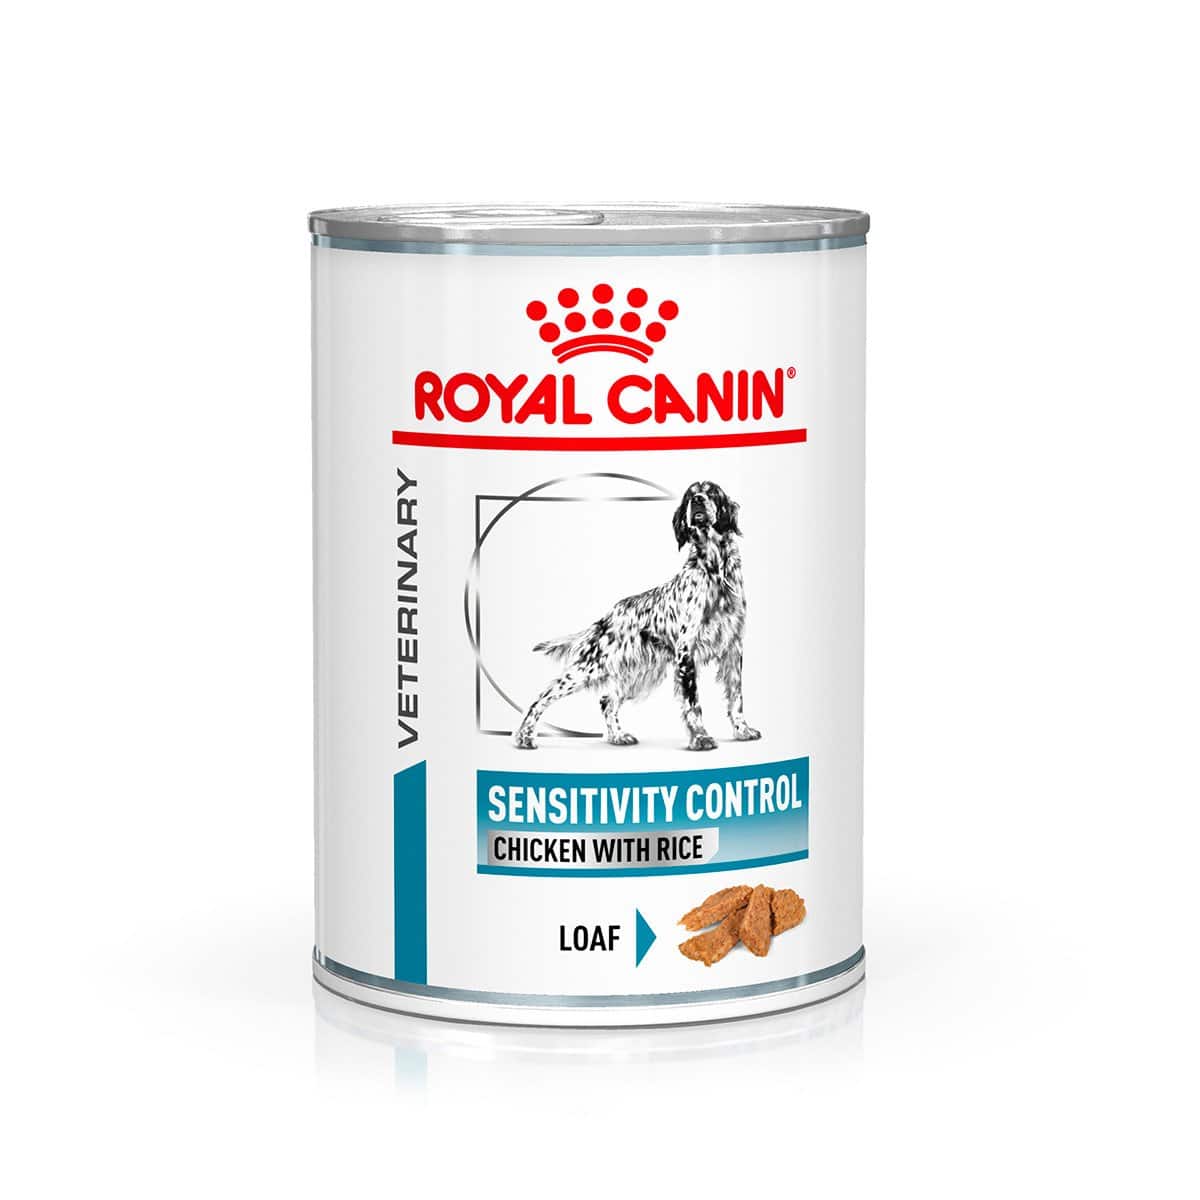 ROYAL CANIN Veterinary SENSITIVITY CONTROL HUHN MIT REIS Nassfutter für Hunde 12x410g